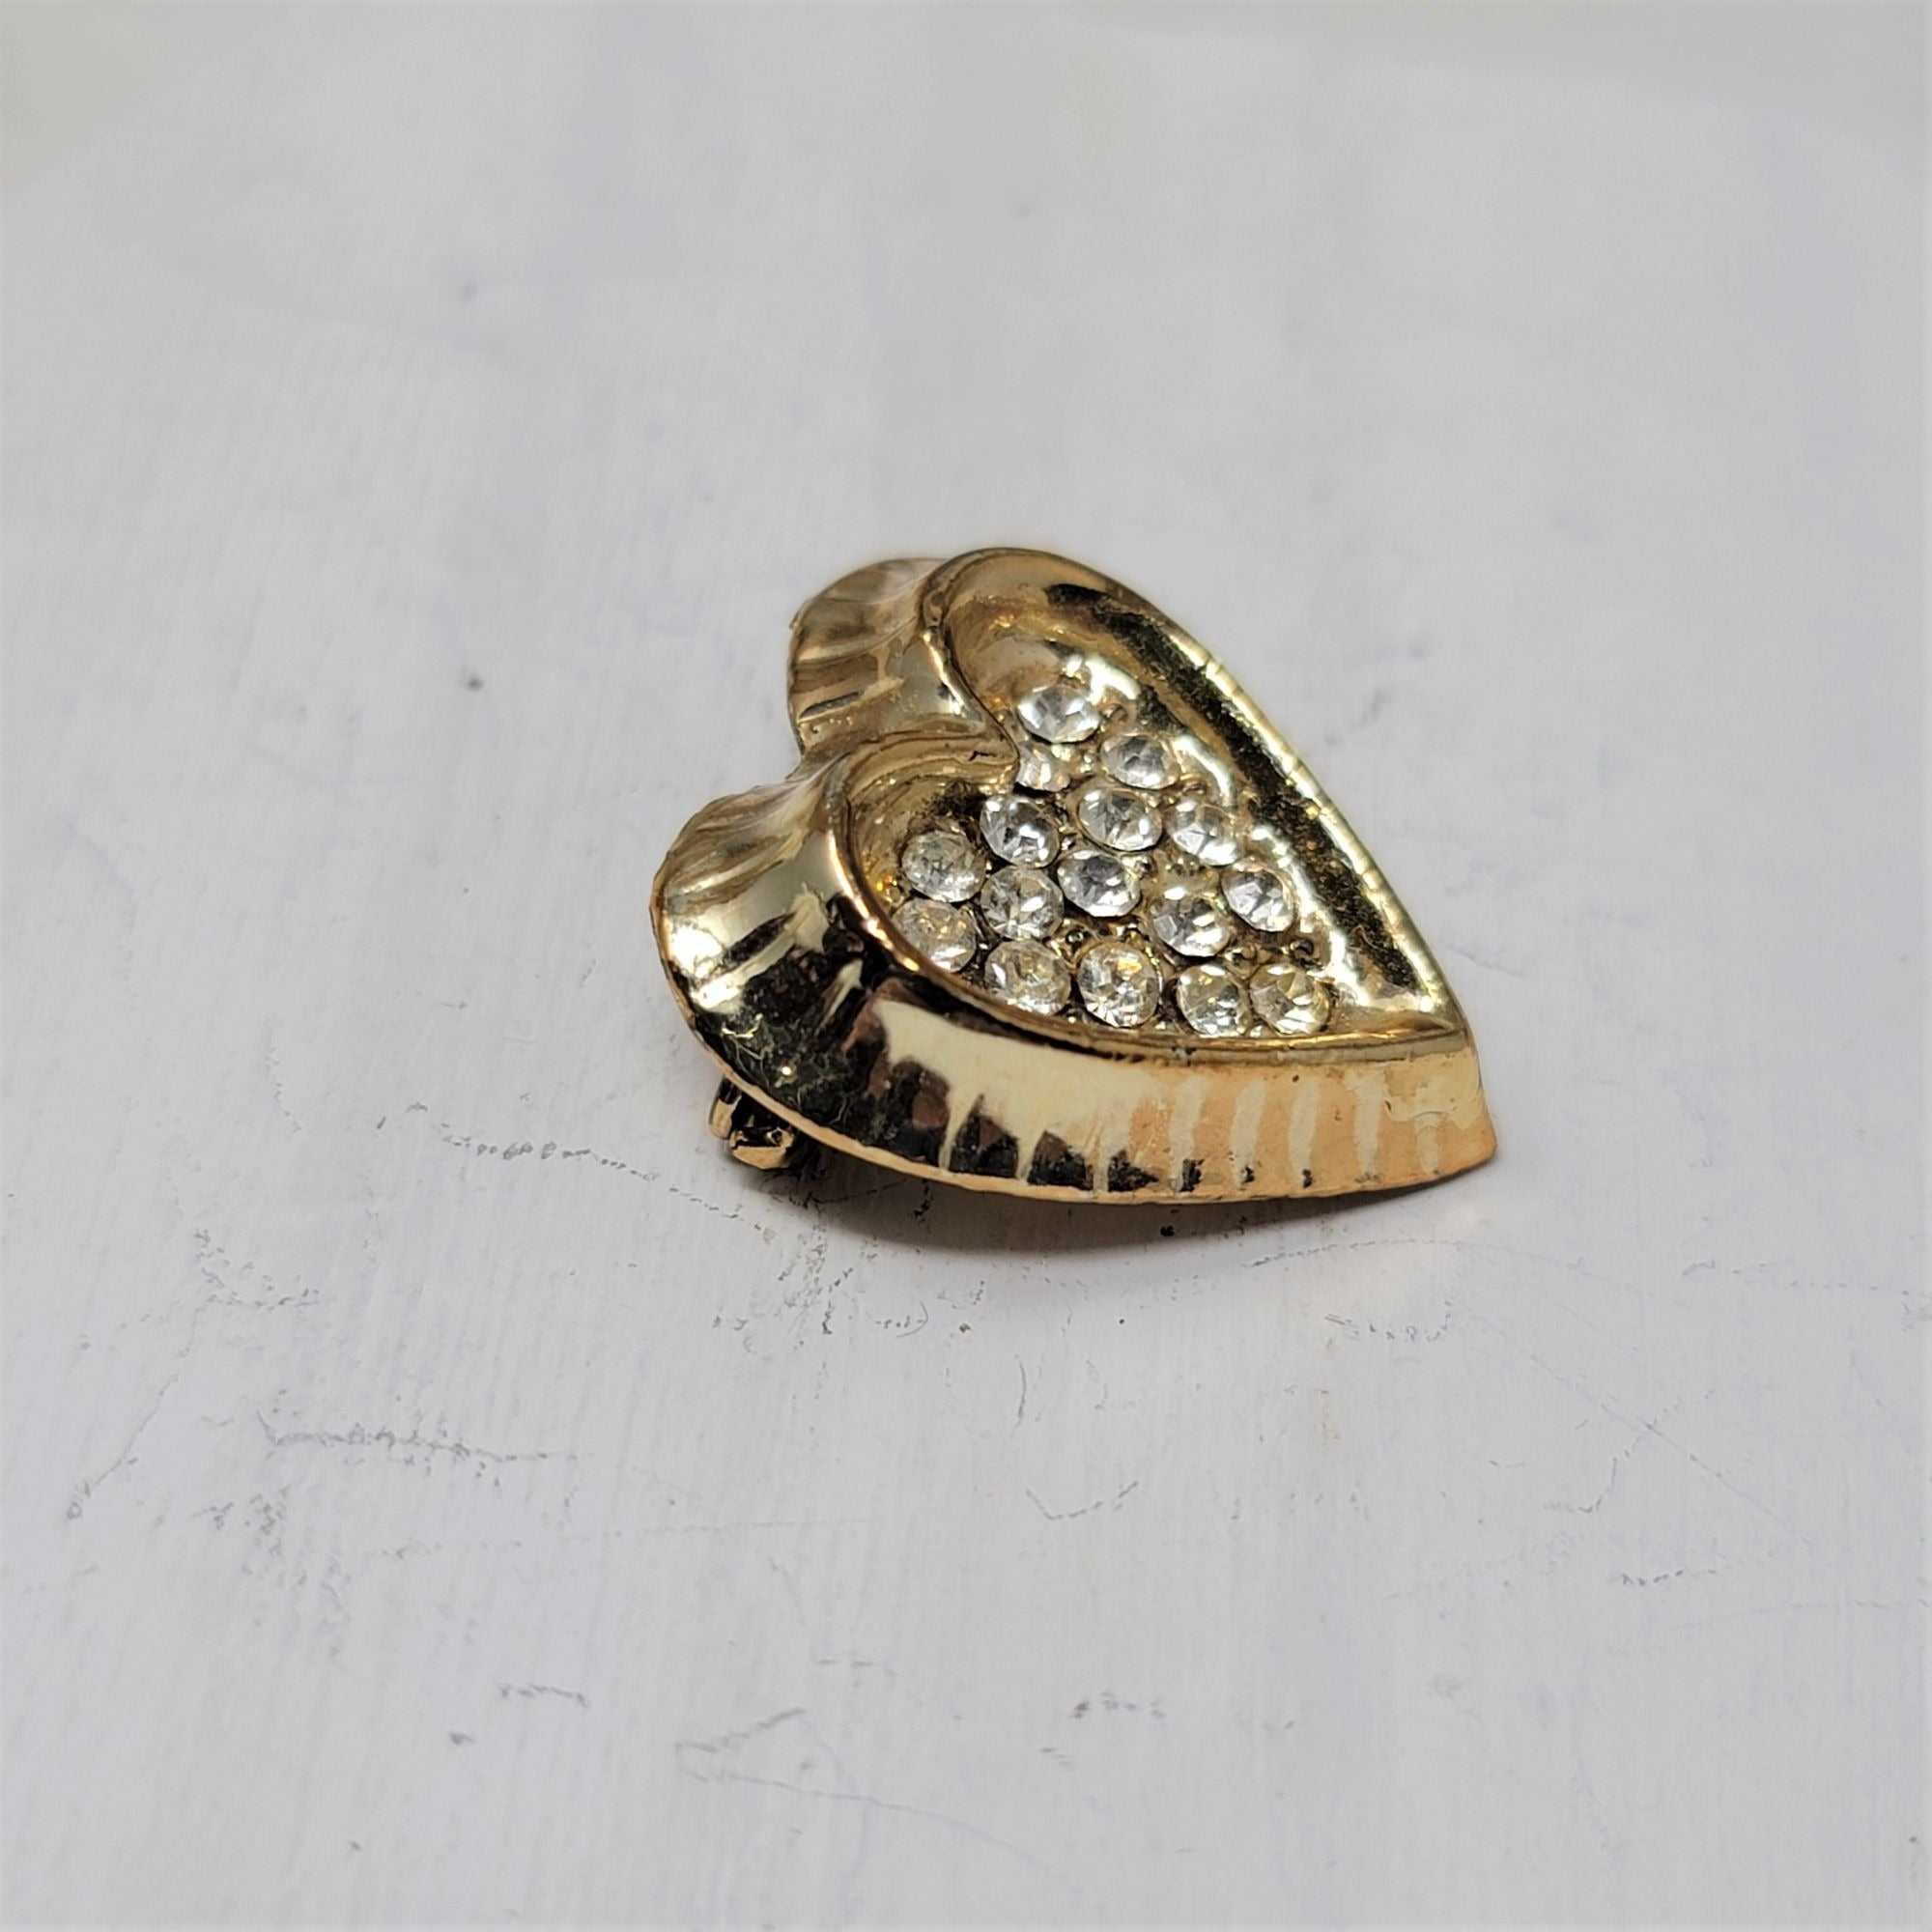 Small Vintage Heart Pin Brooch Rhinestone Center Gold tone